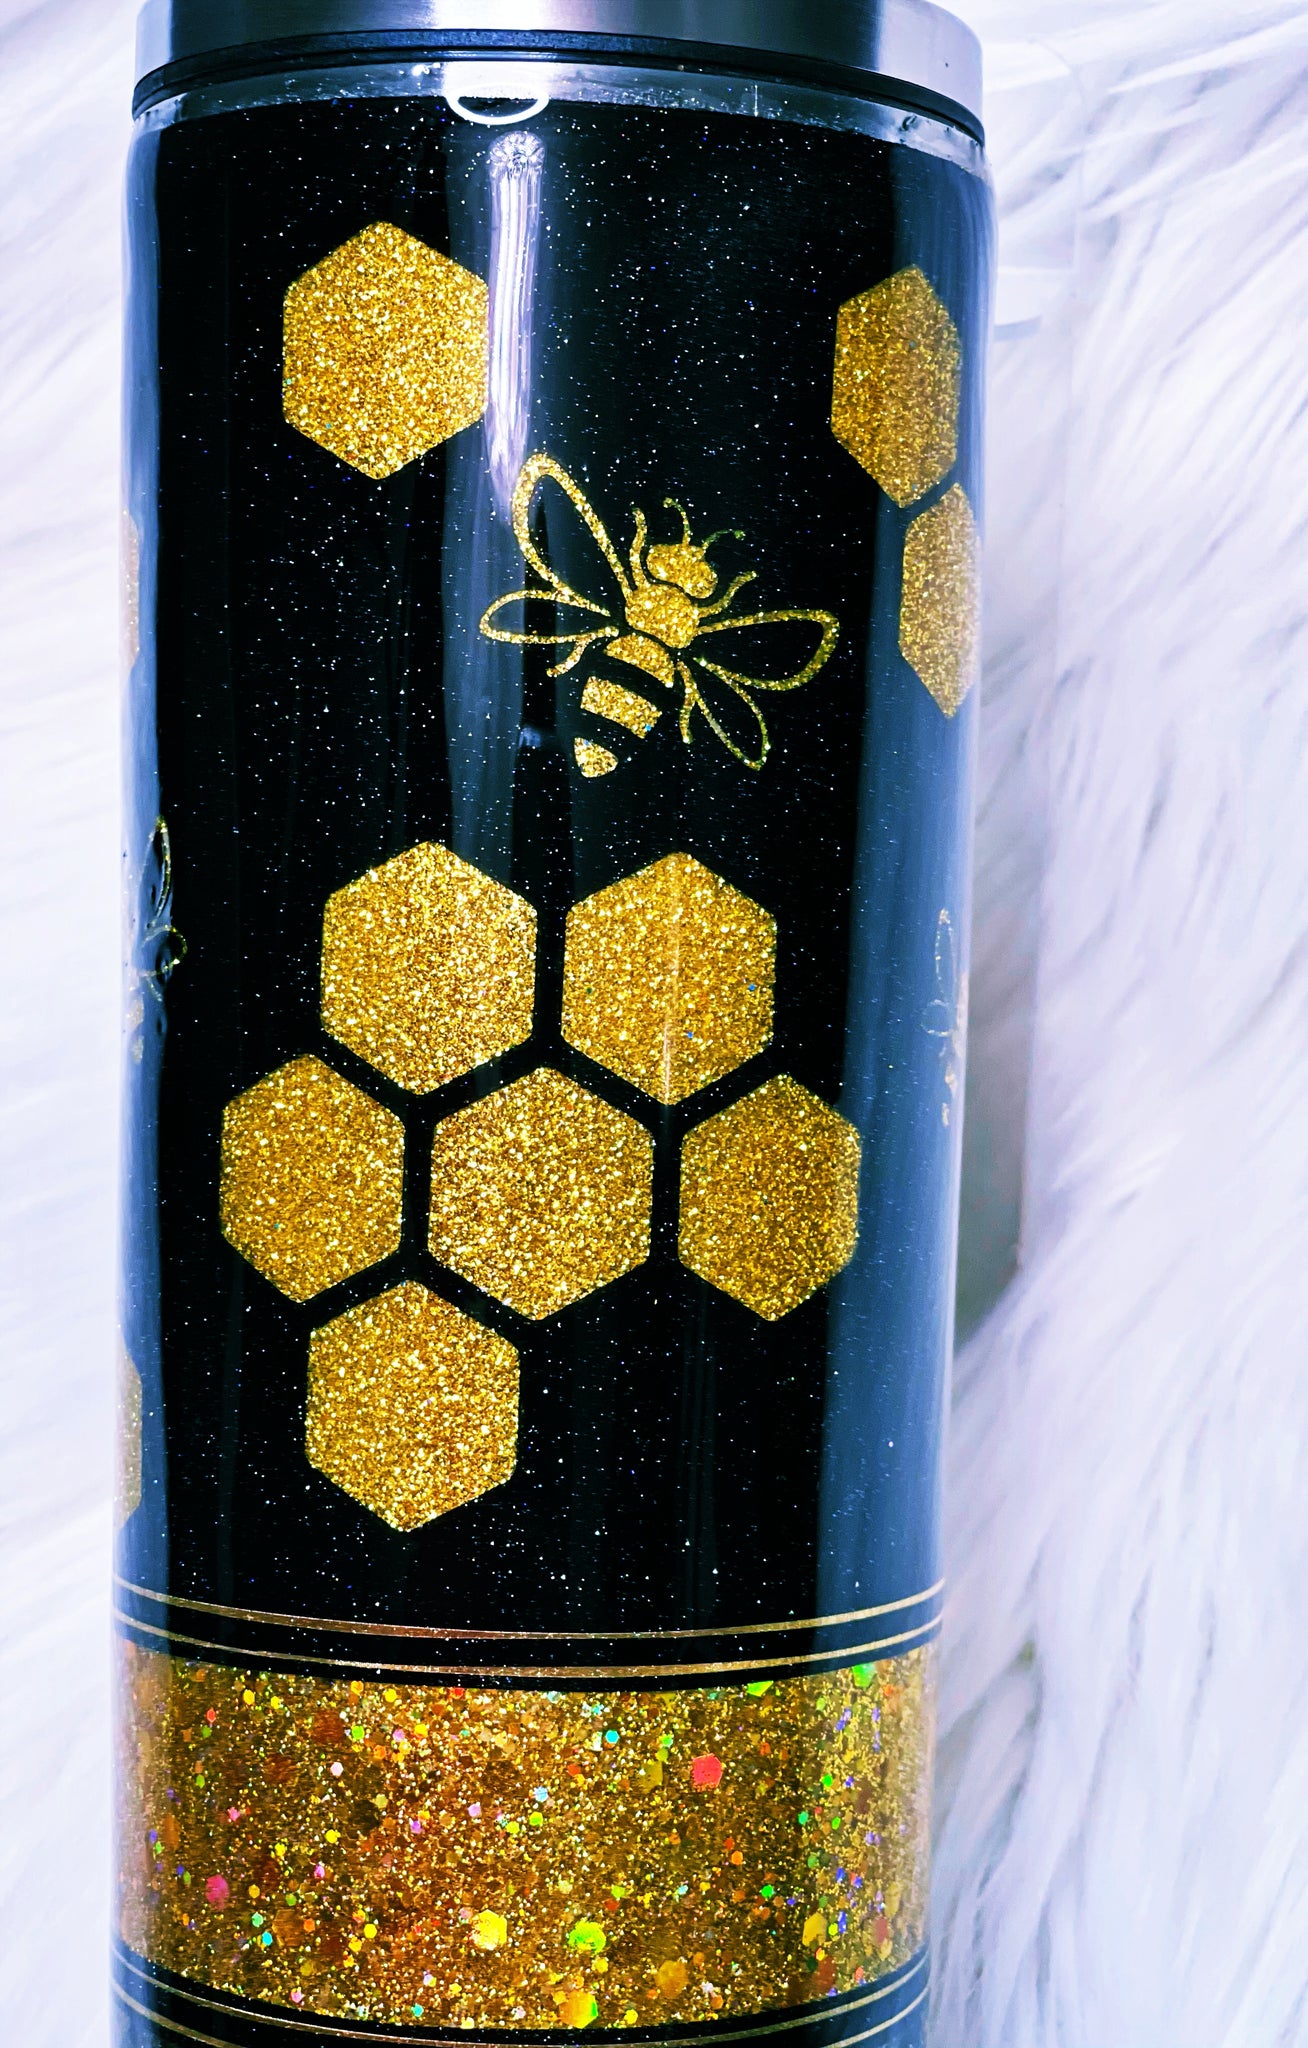 Bee & Honeycomb Custom Insulated Tumbler Large Iced Coffee Cup